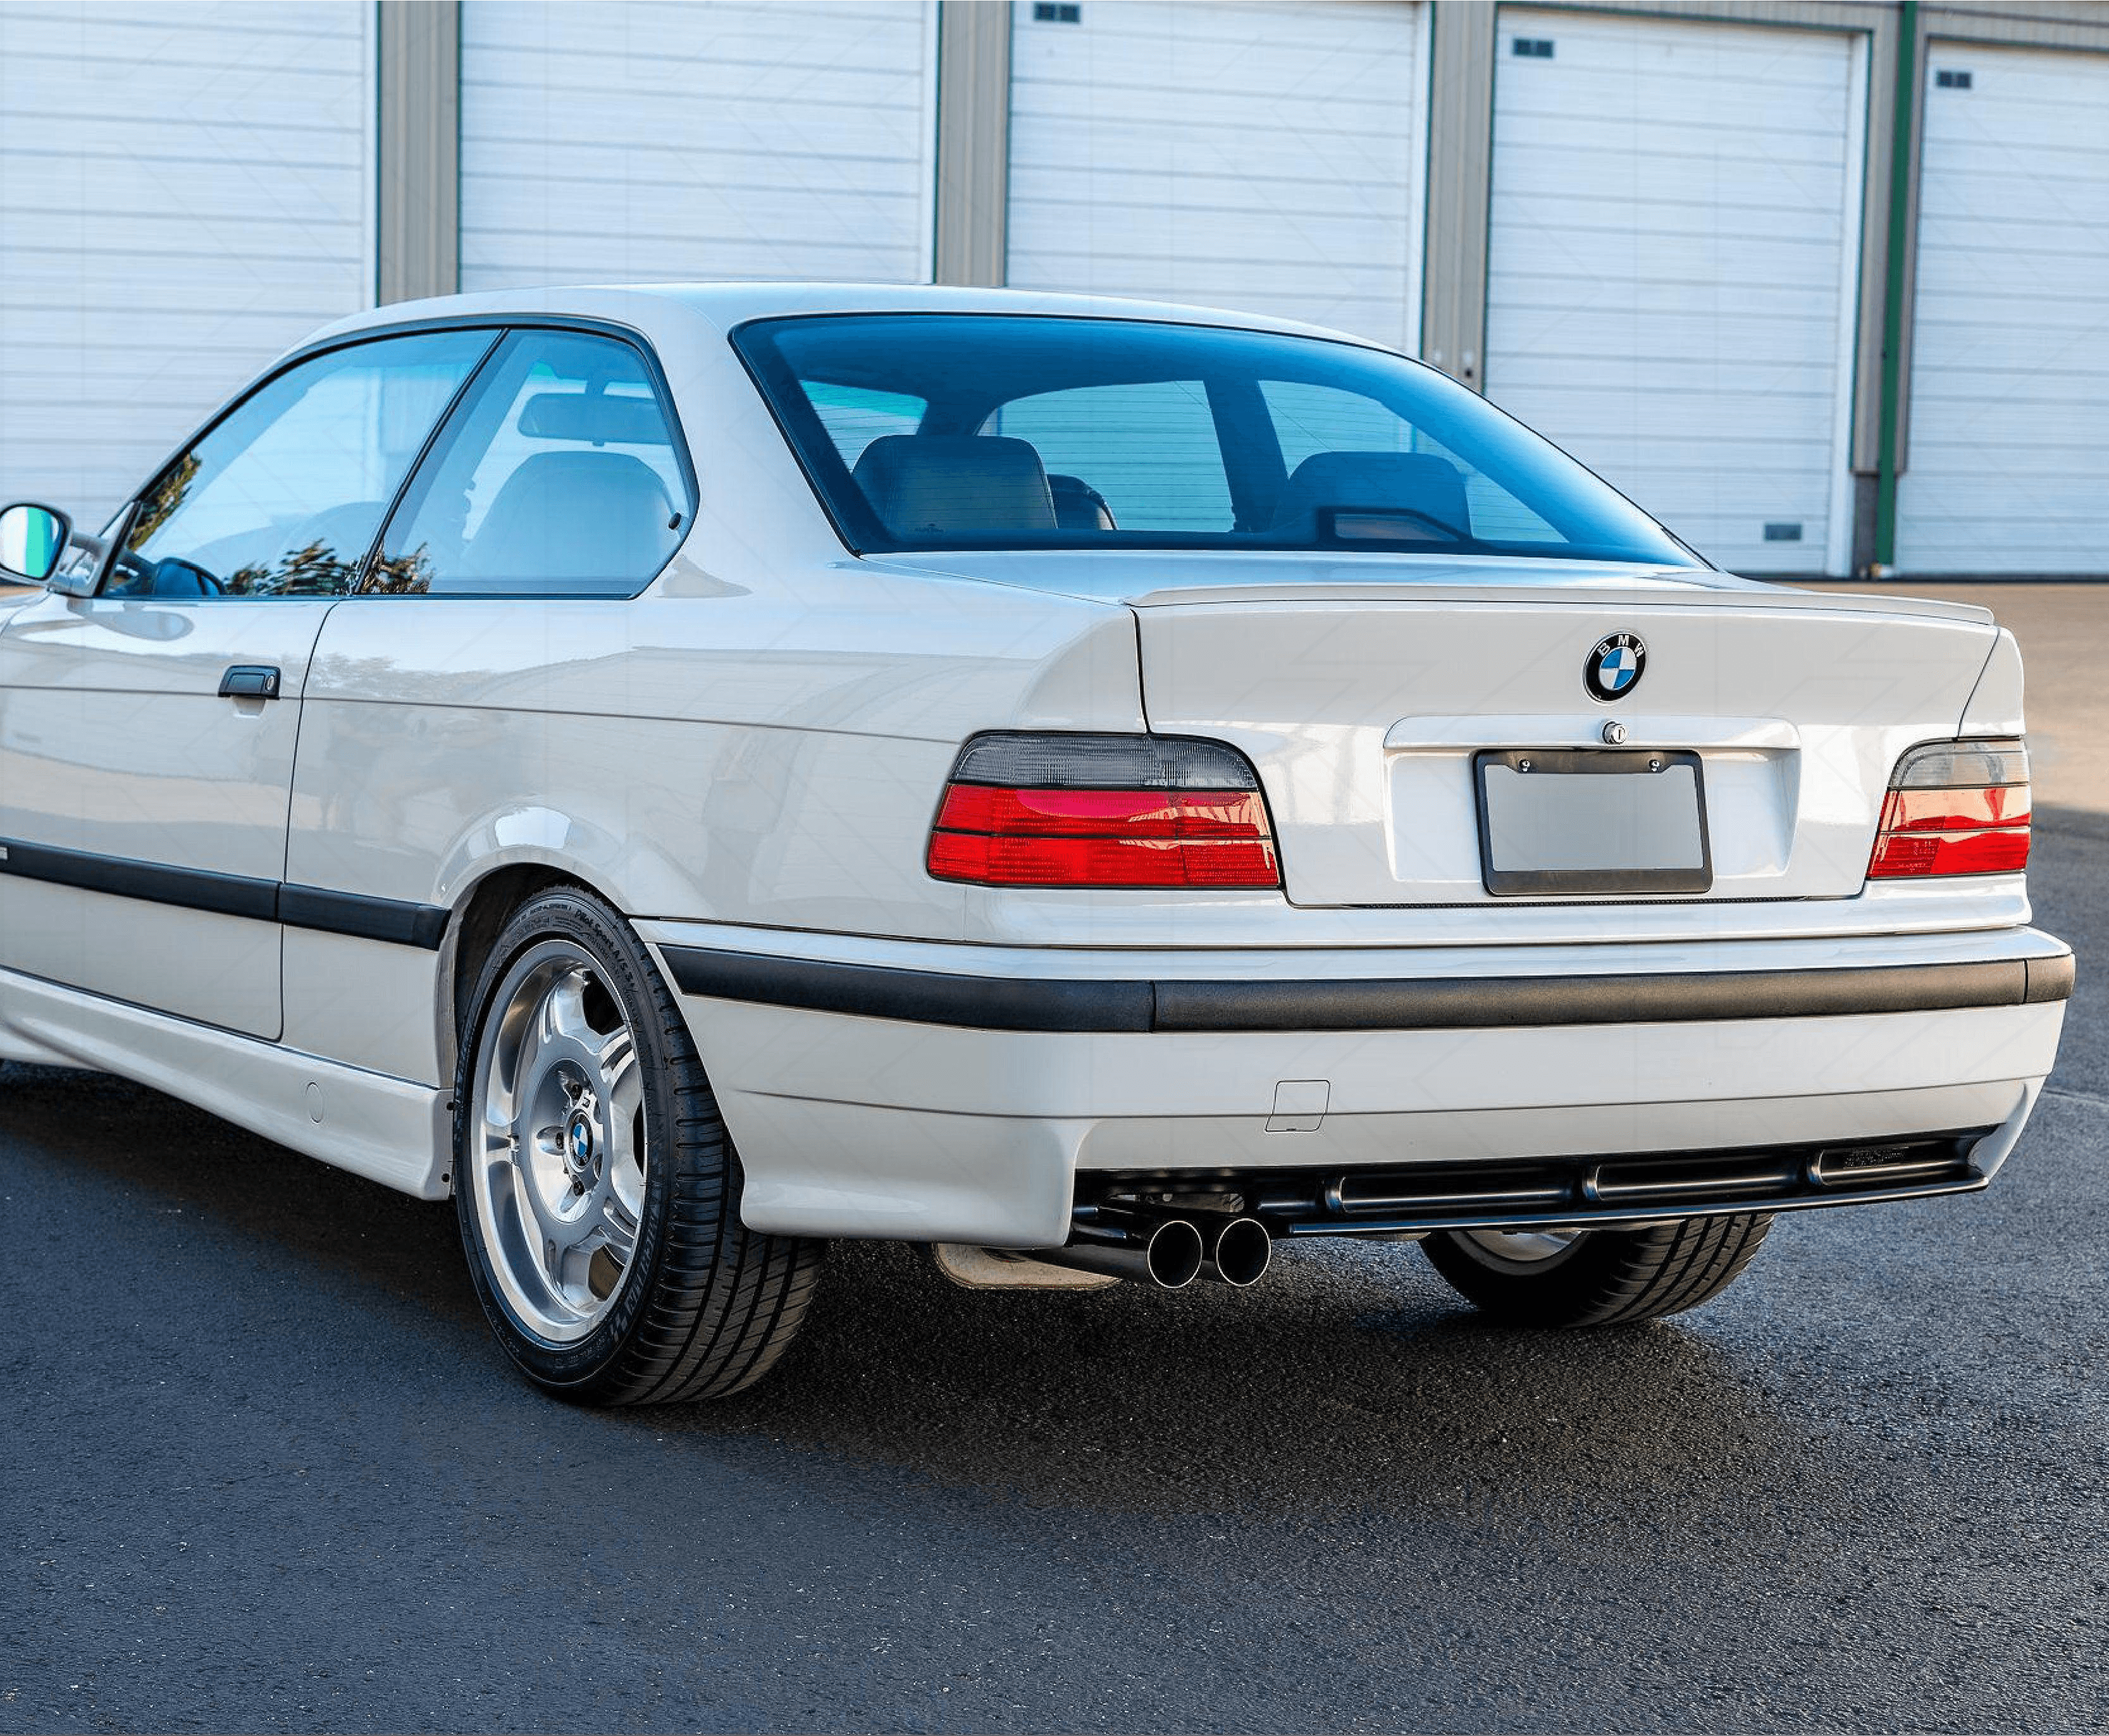 BMW E36 2D/Cabrio Tail Lights(1992-1999) - K2 Industries